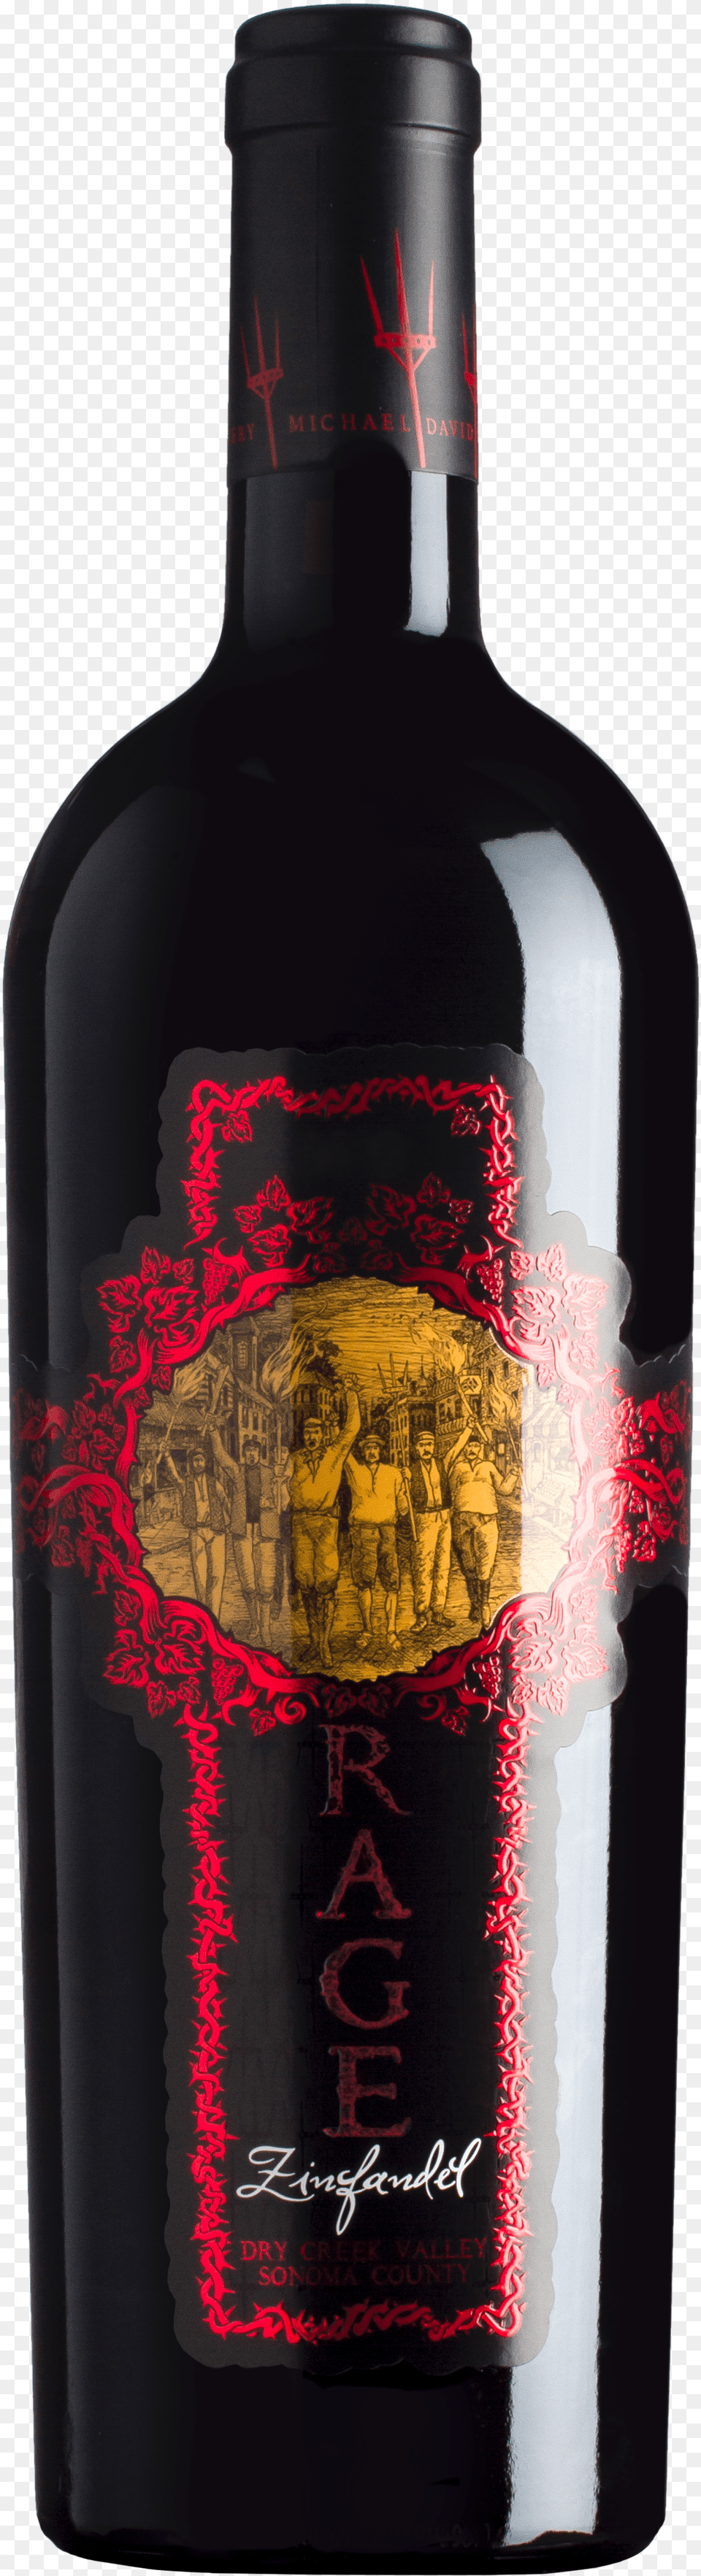 Bottle Of Wine Png Image